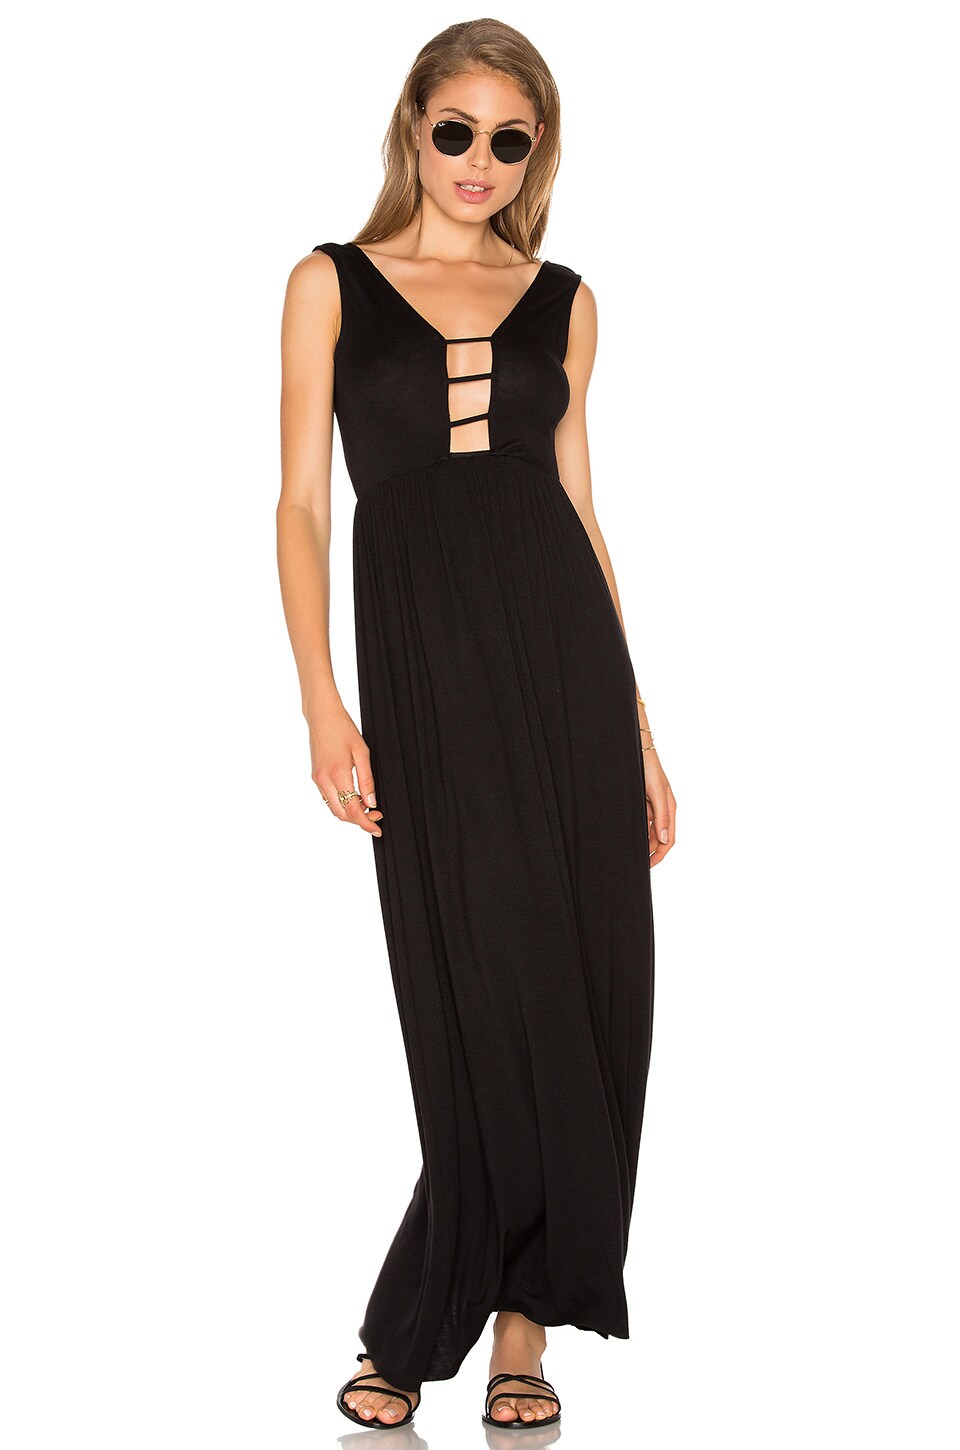 Clayton Sapphire Dress in Black | REVOLVE